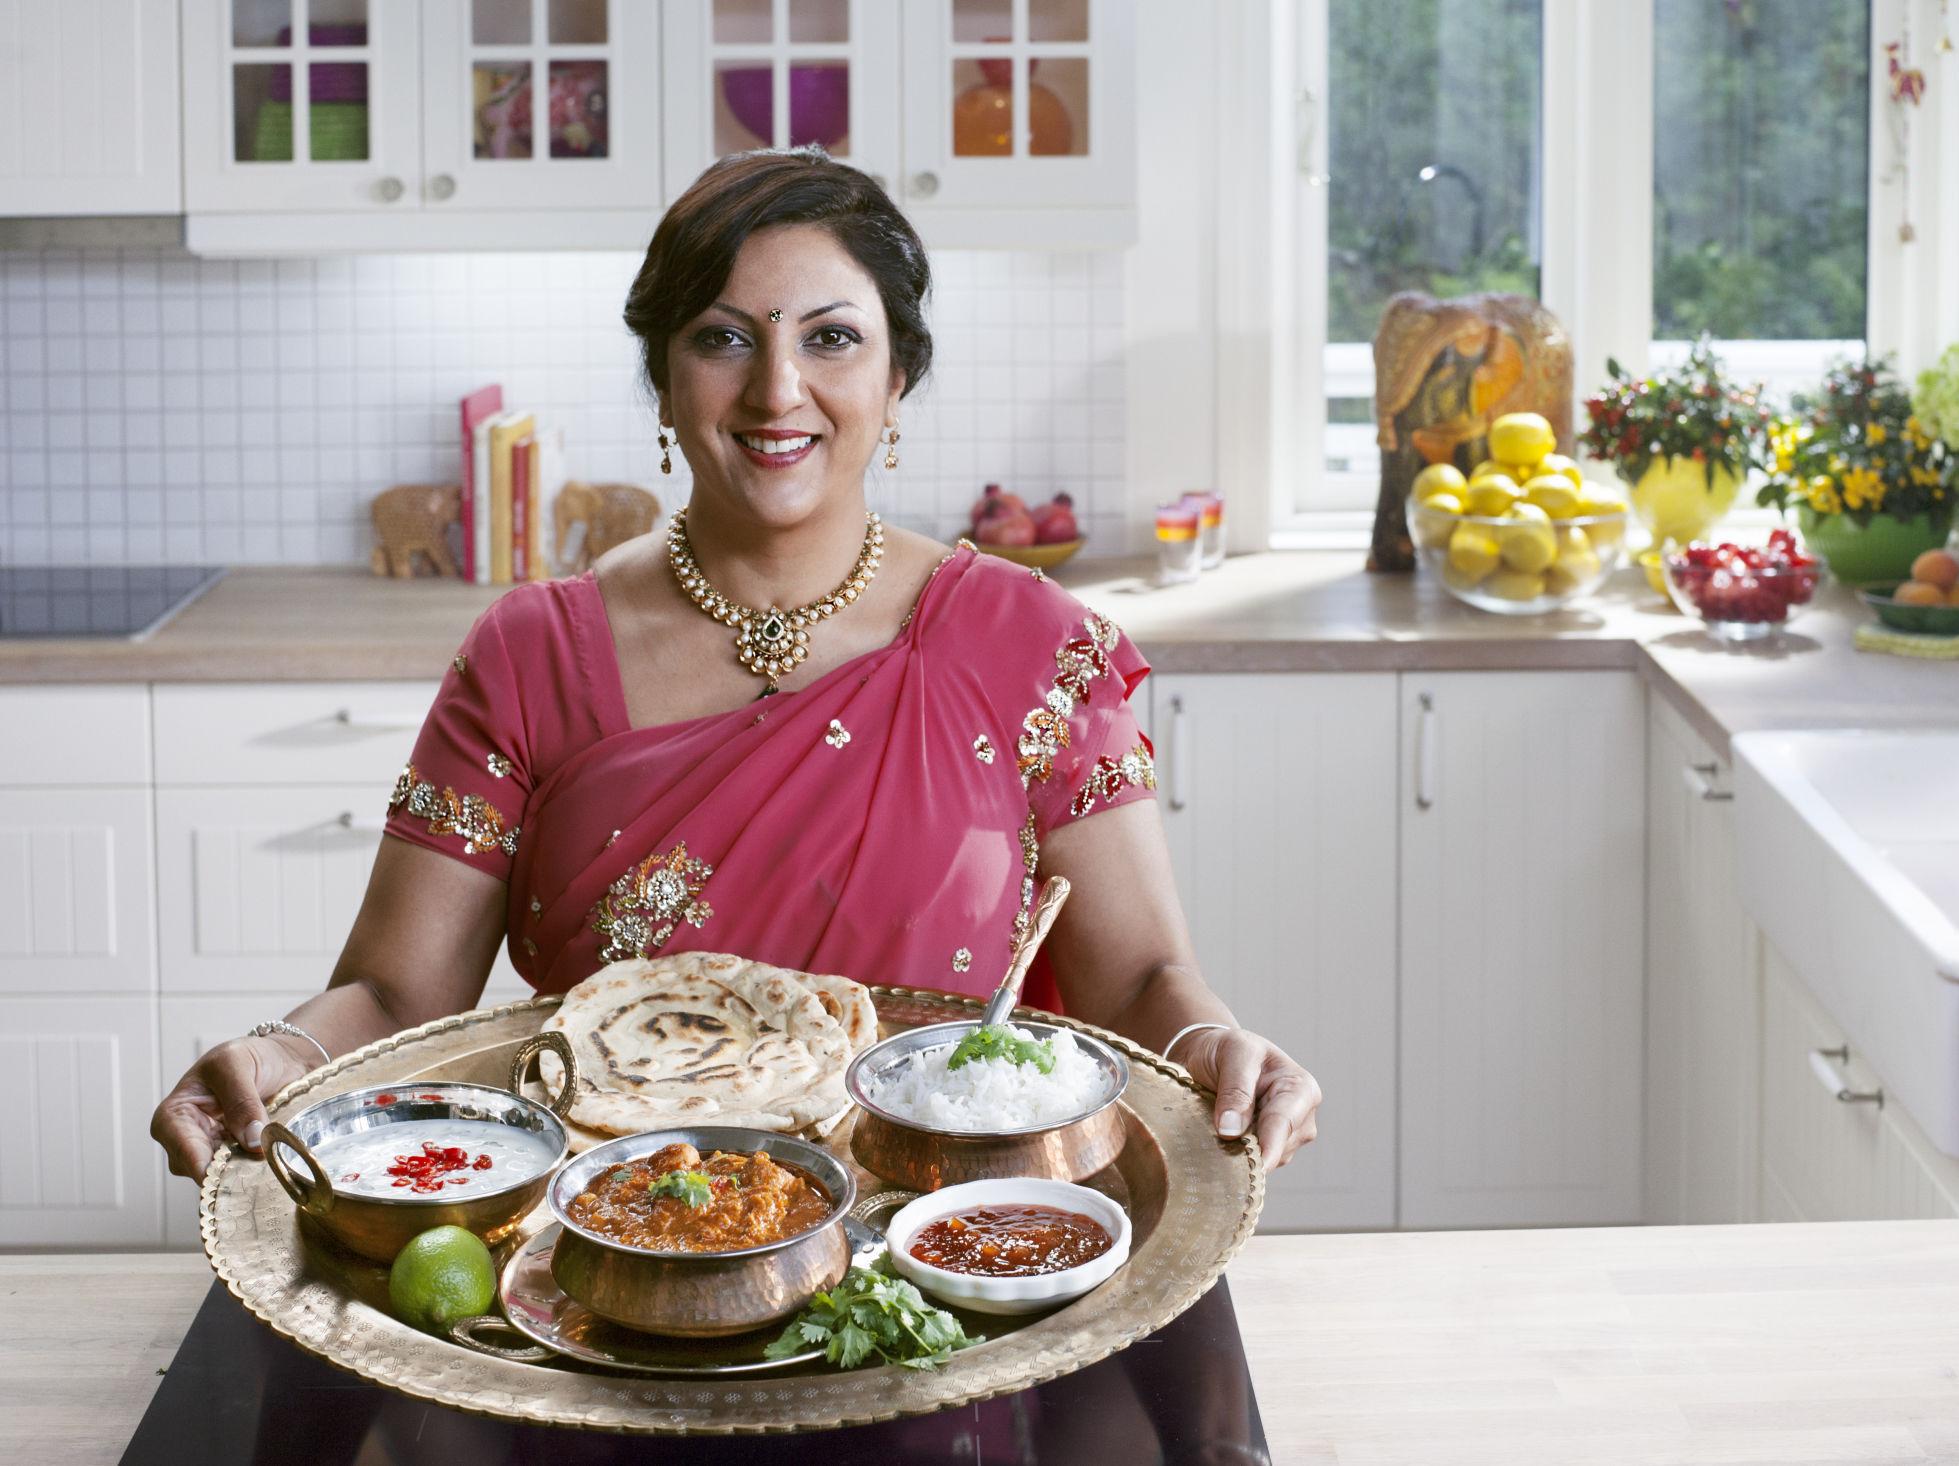 INDISK LEVEBRØD: Sarita Sehjpal har indisk mat som både levebrød og lidenskap. Kokken håper at flere nordmenn vil tørre å lage mer indisk mat hjemme med hennes enkle oppskrifter. Foto: Saritas.no